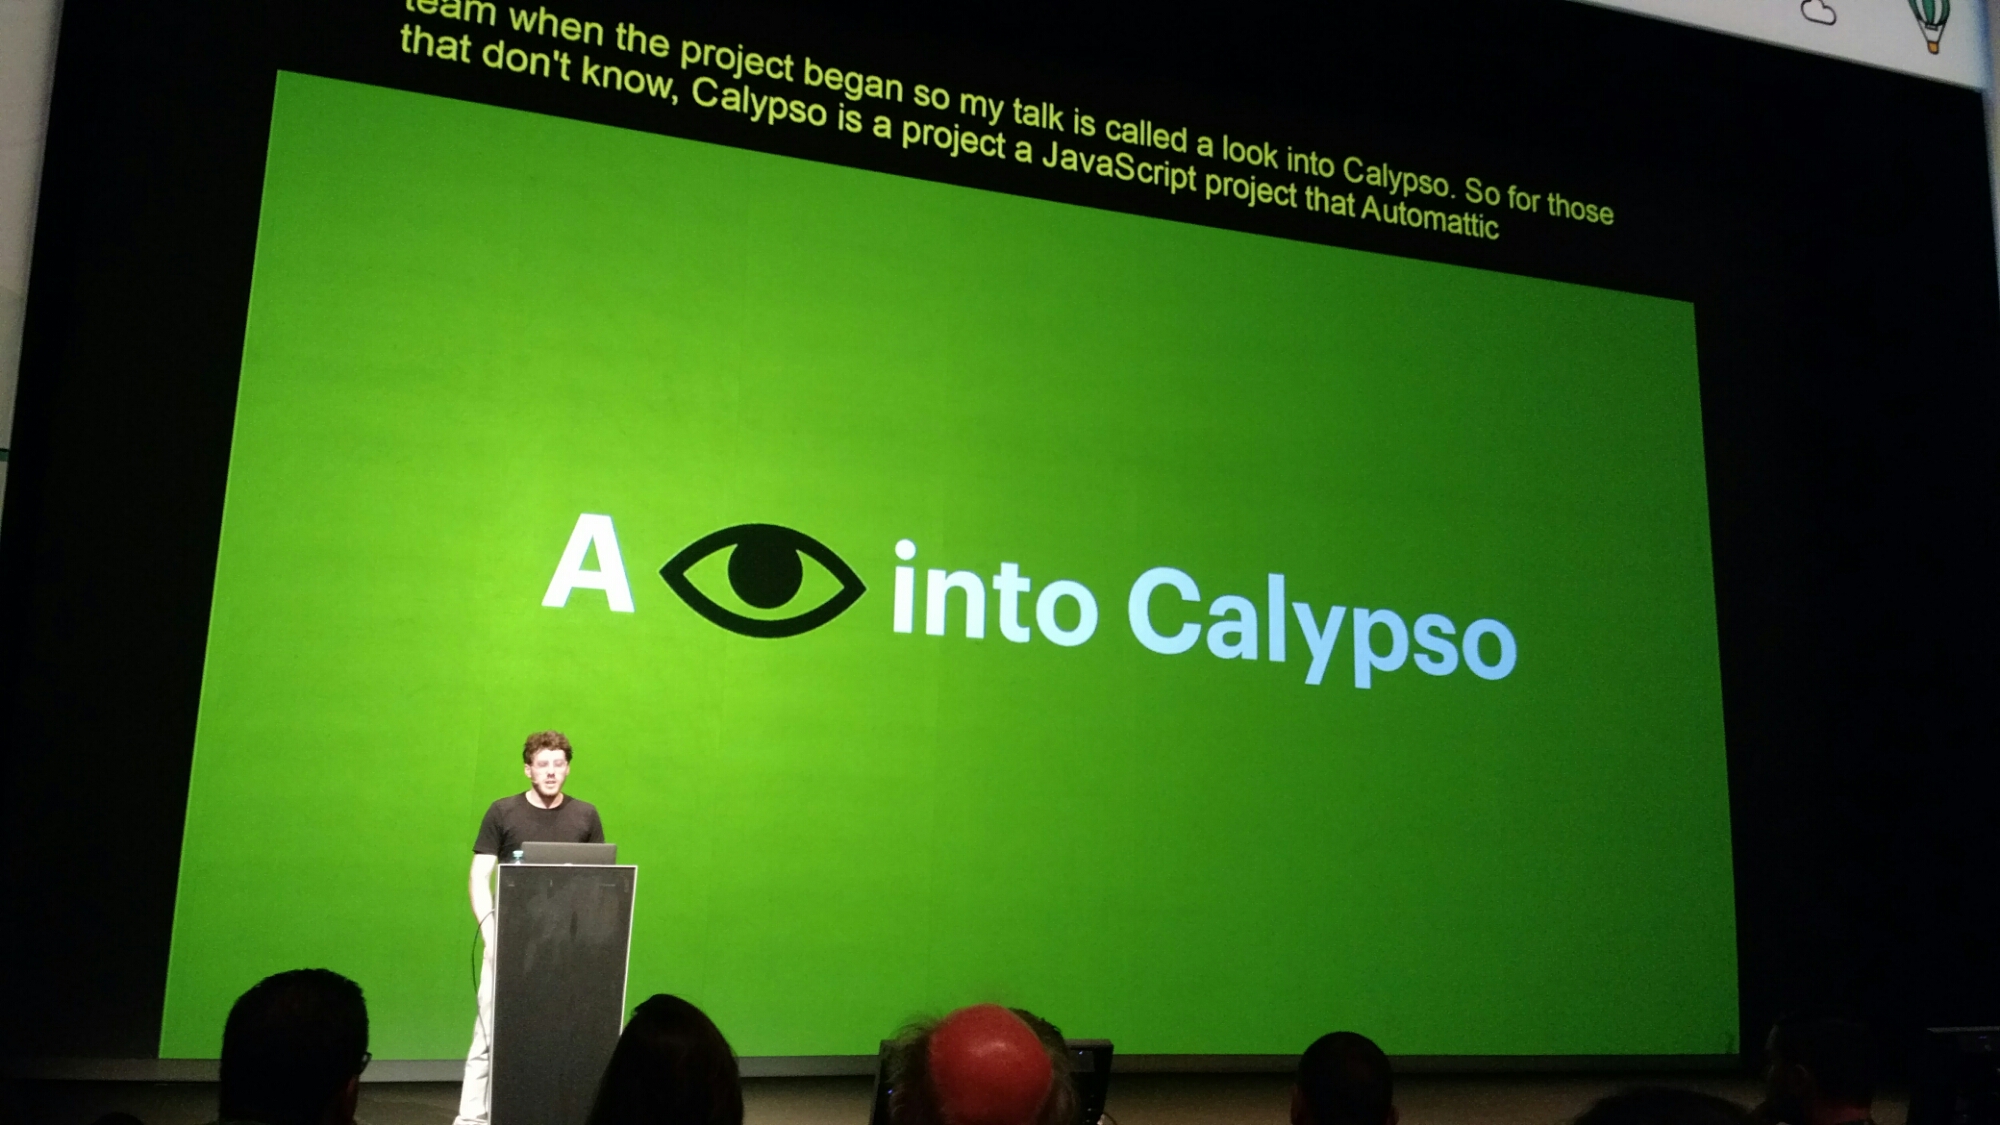 Matias talking about calypso at Wordcamp Europe